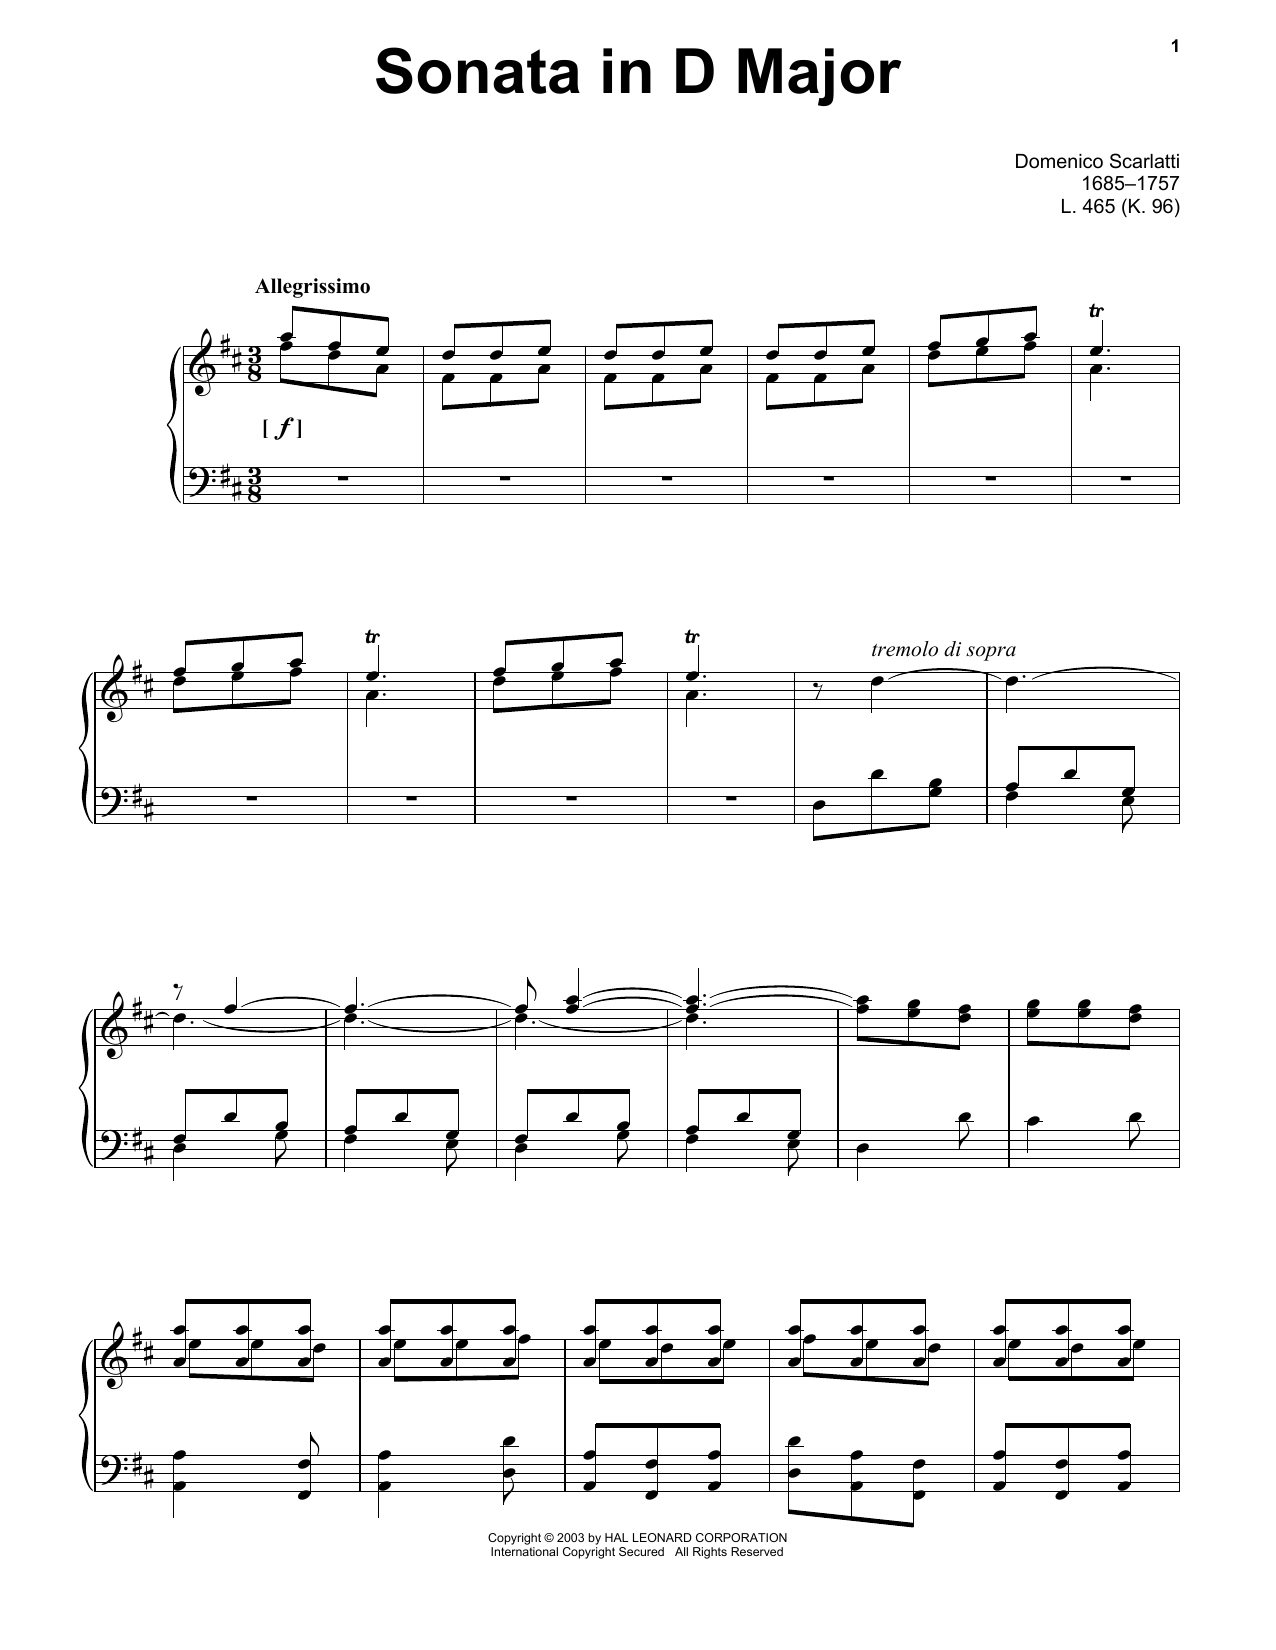 Domenico Scarlatti Sonata In D Major, K. 96 sheet music notes and chords arranged for Piano Solo